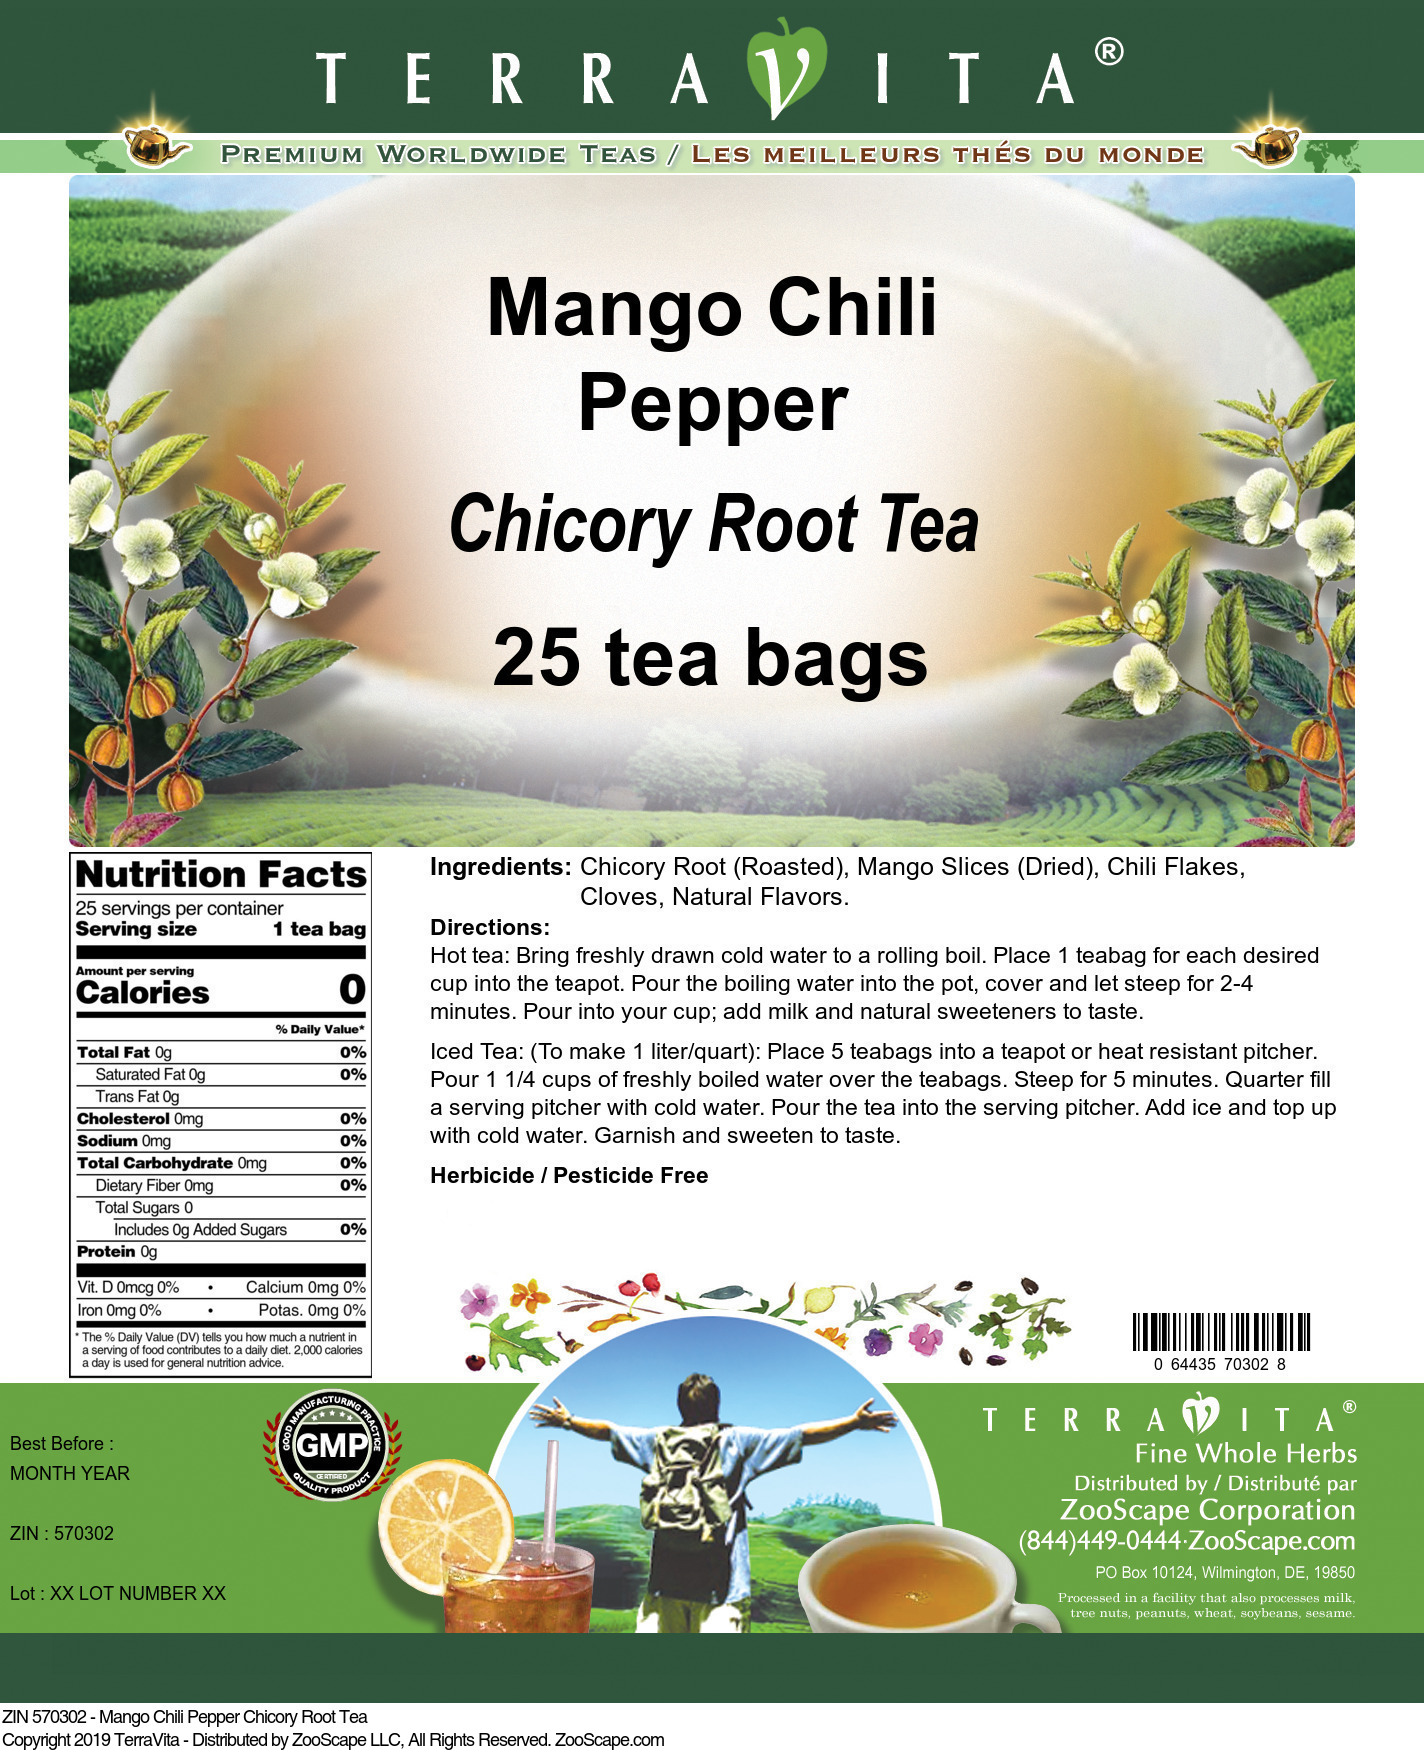 Mango Chili Pepper Chicory Root Tea - Label